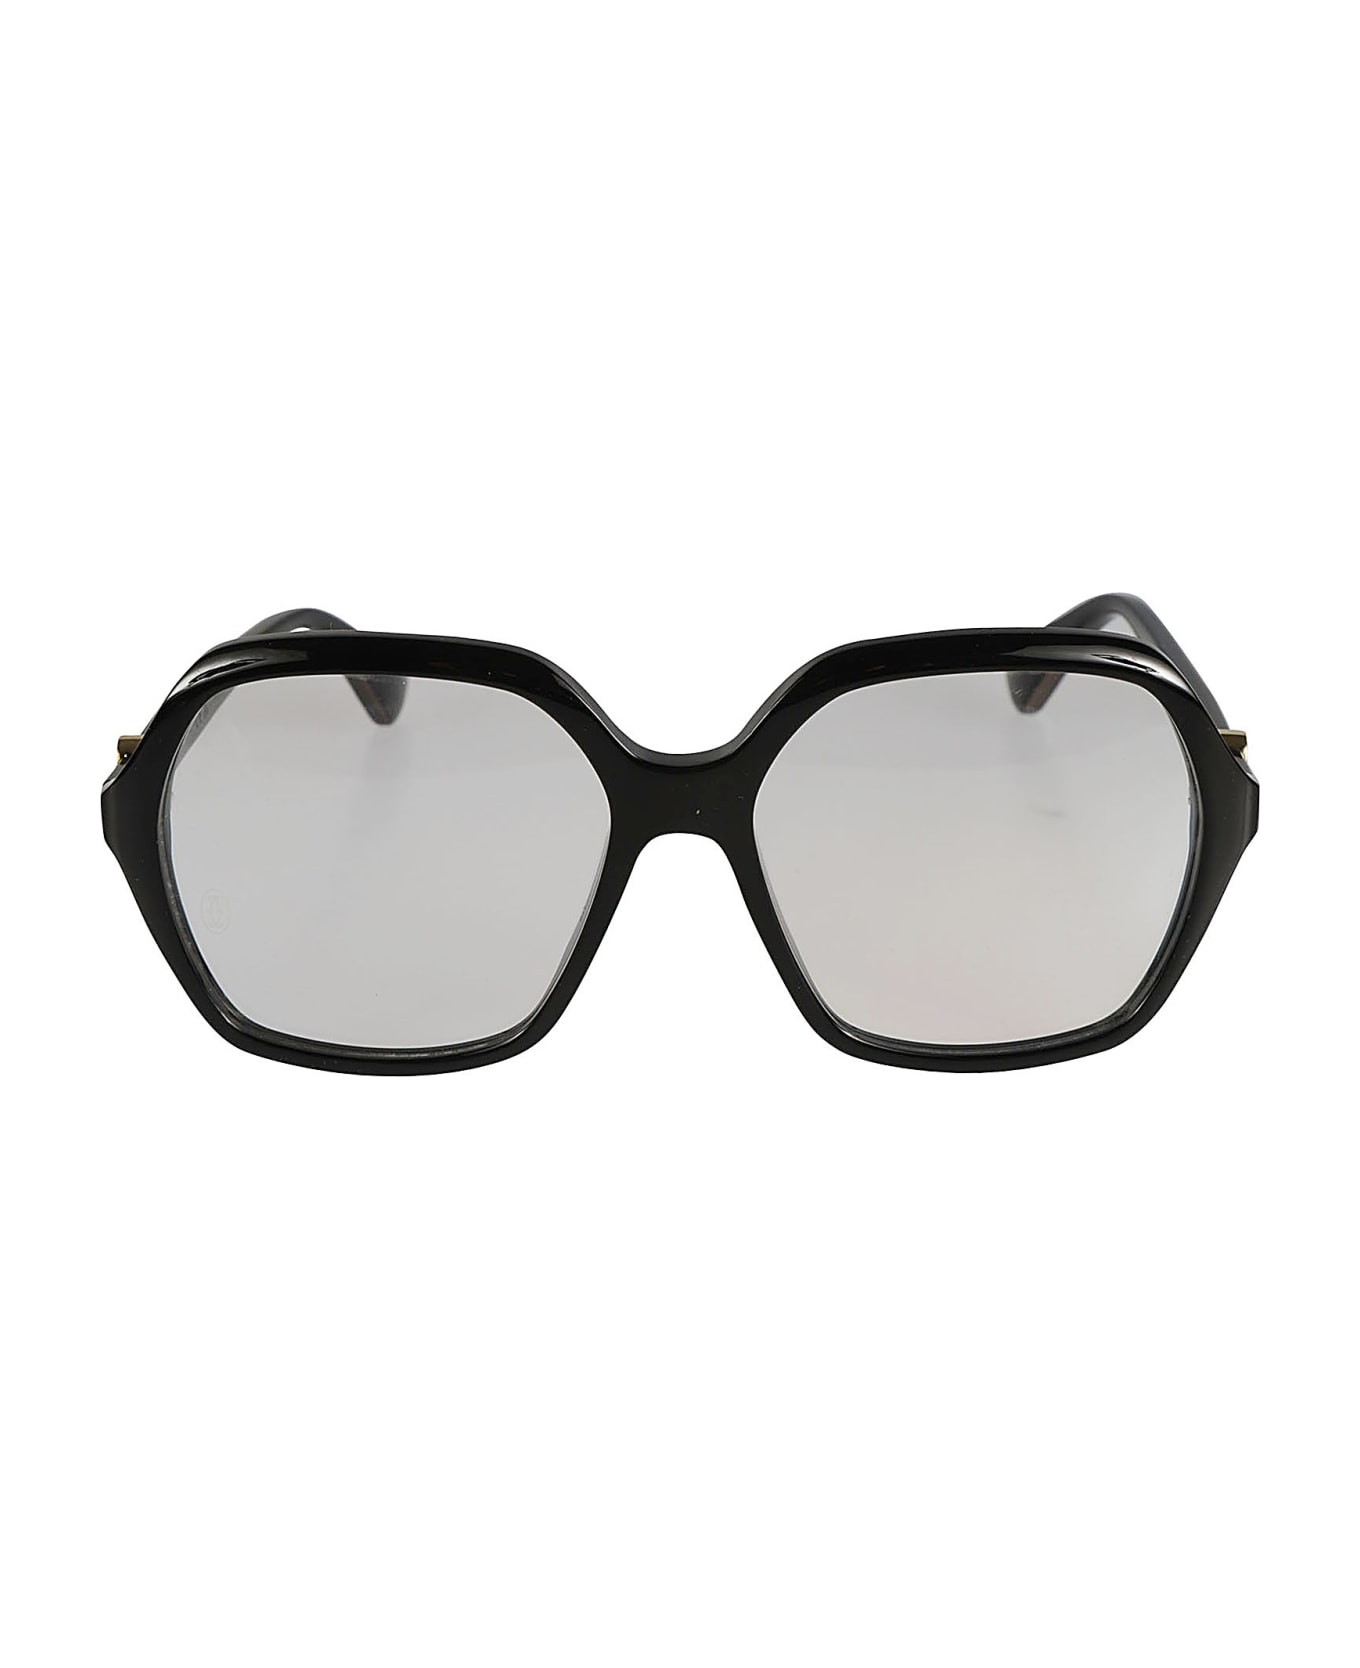 Cartier Eyewear Pentagon Rim Clear Lens Glasses - Black/Transparent アイウェア